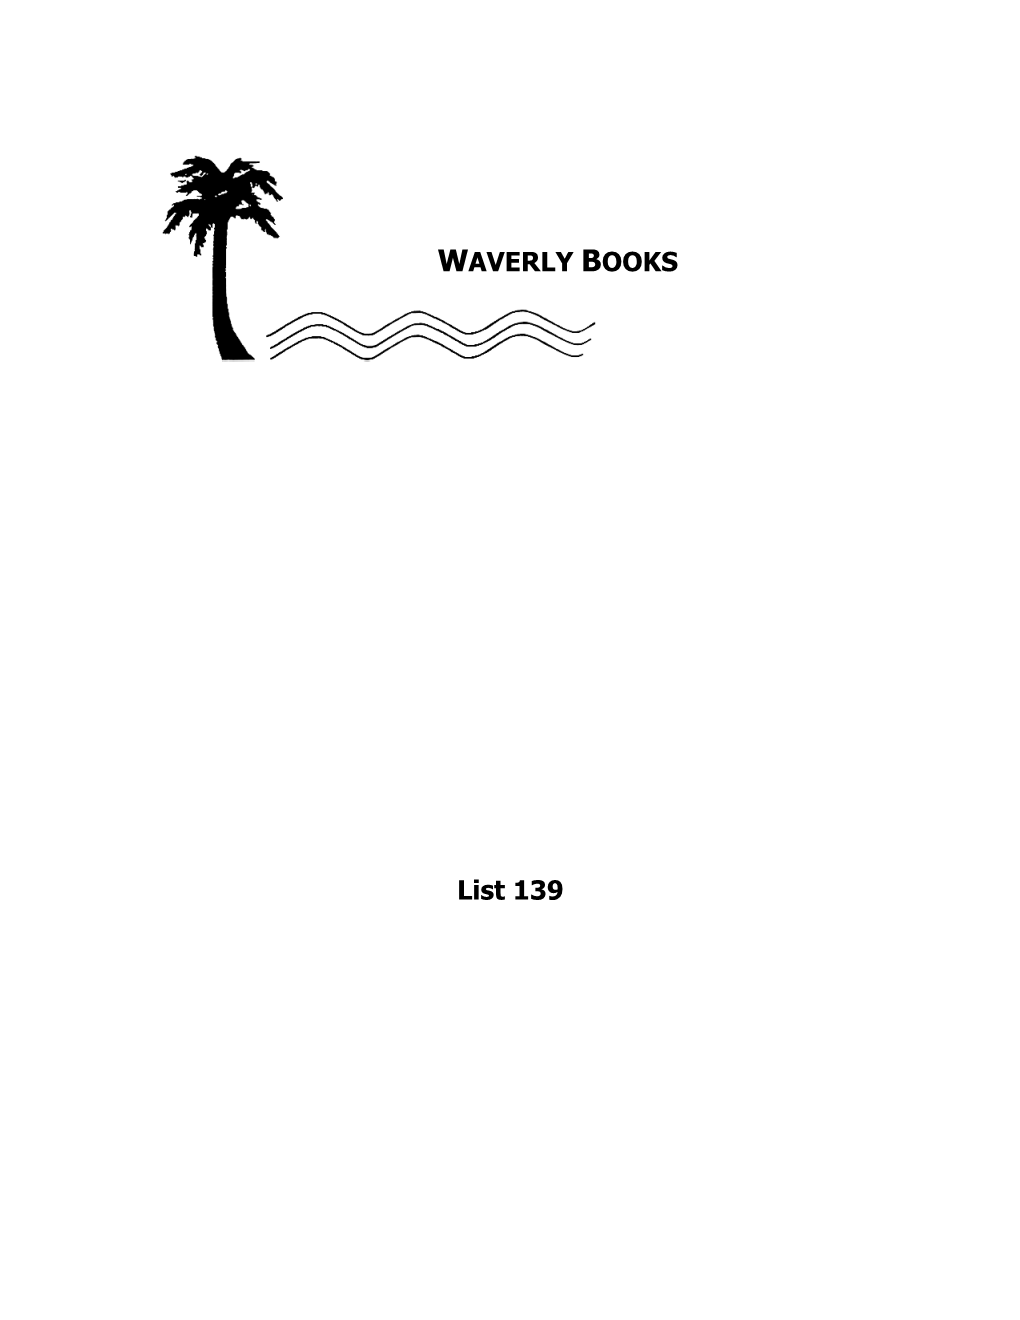 WAVERLY BOOKS List